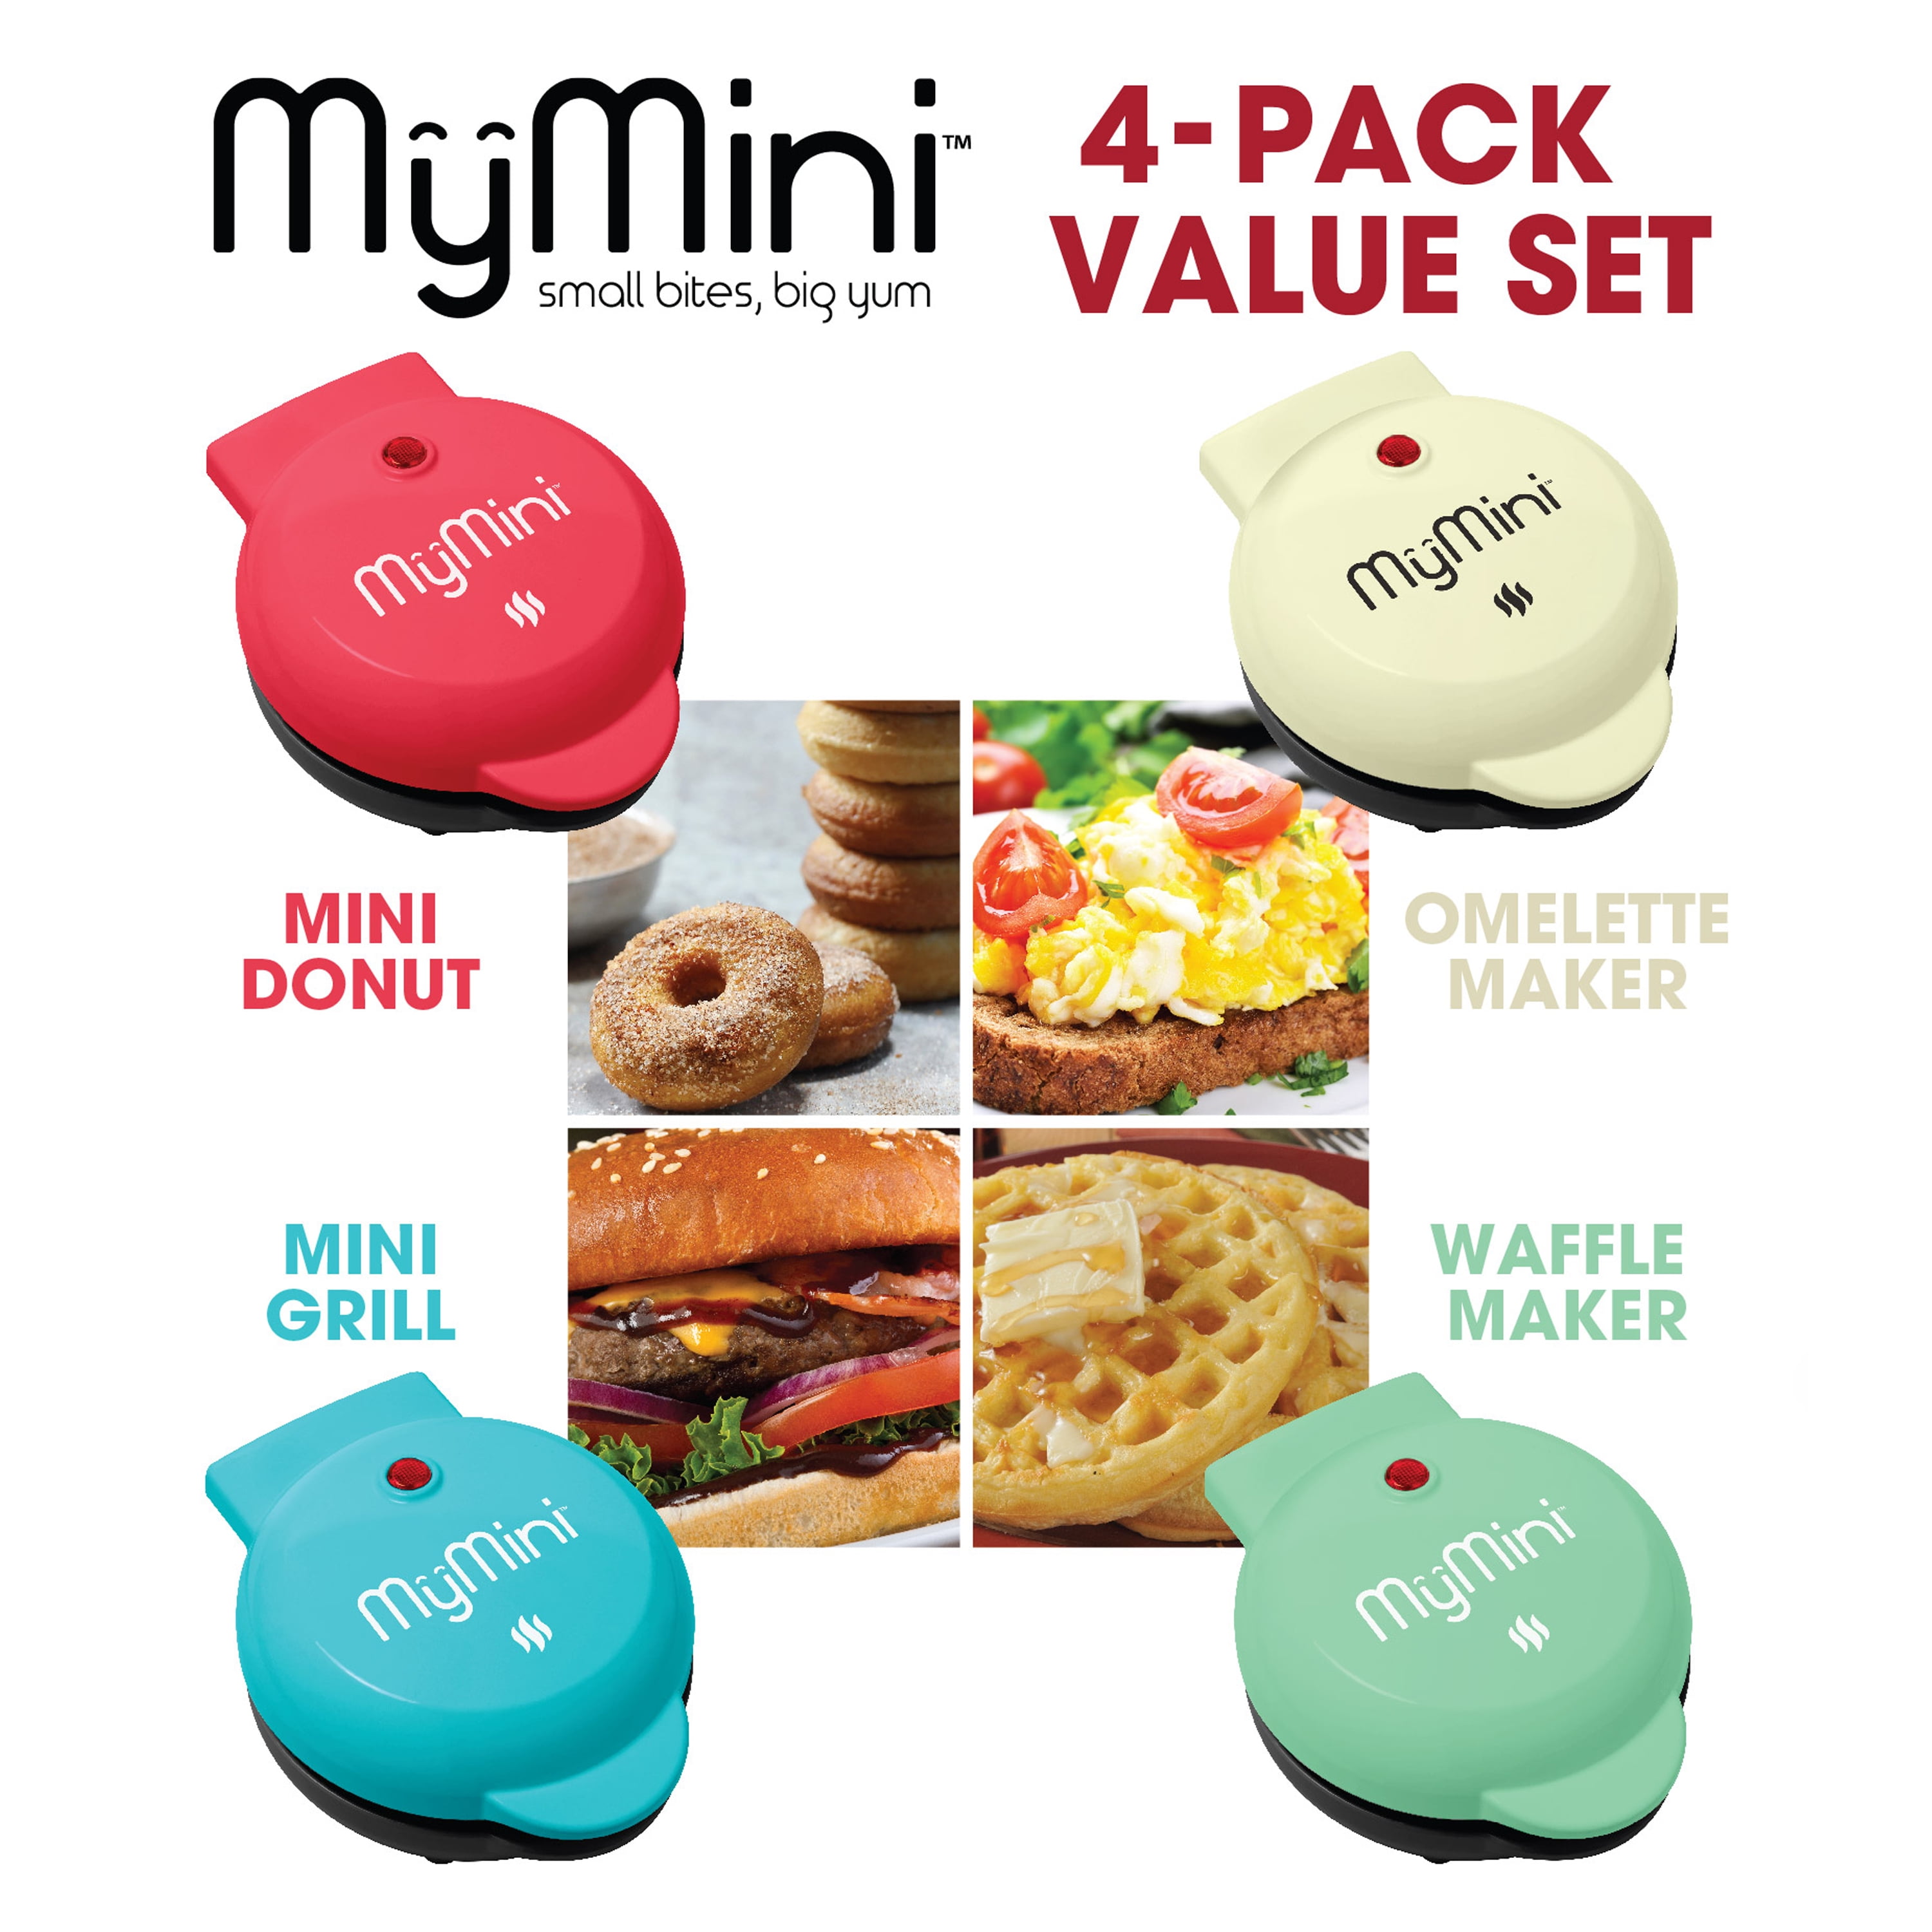 MyMini Deluxe Value Box Set; includes Waffle Maker, Griddle, Donut Maker, and Omelette Maker 4 pack